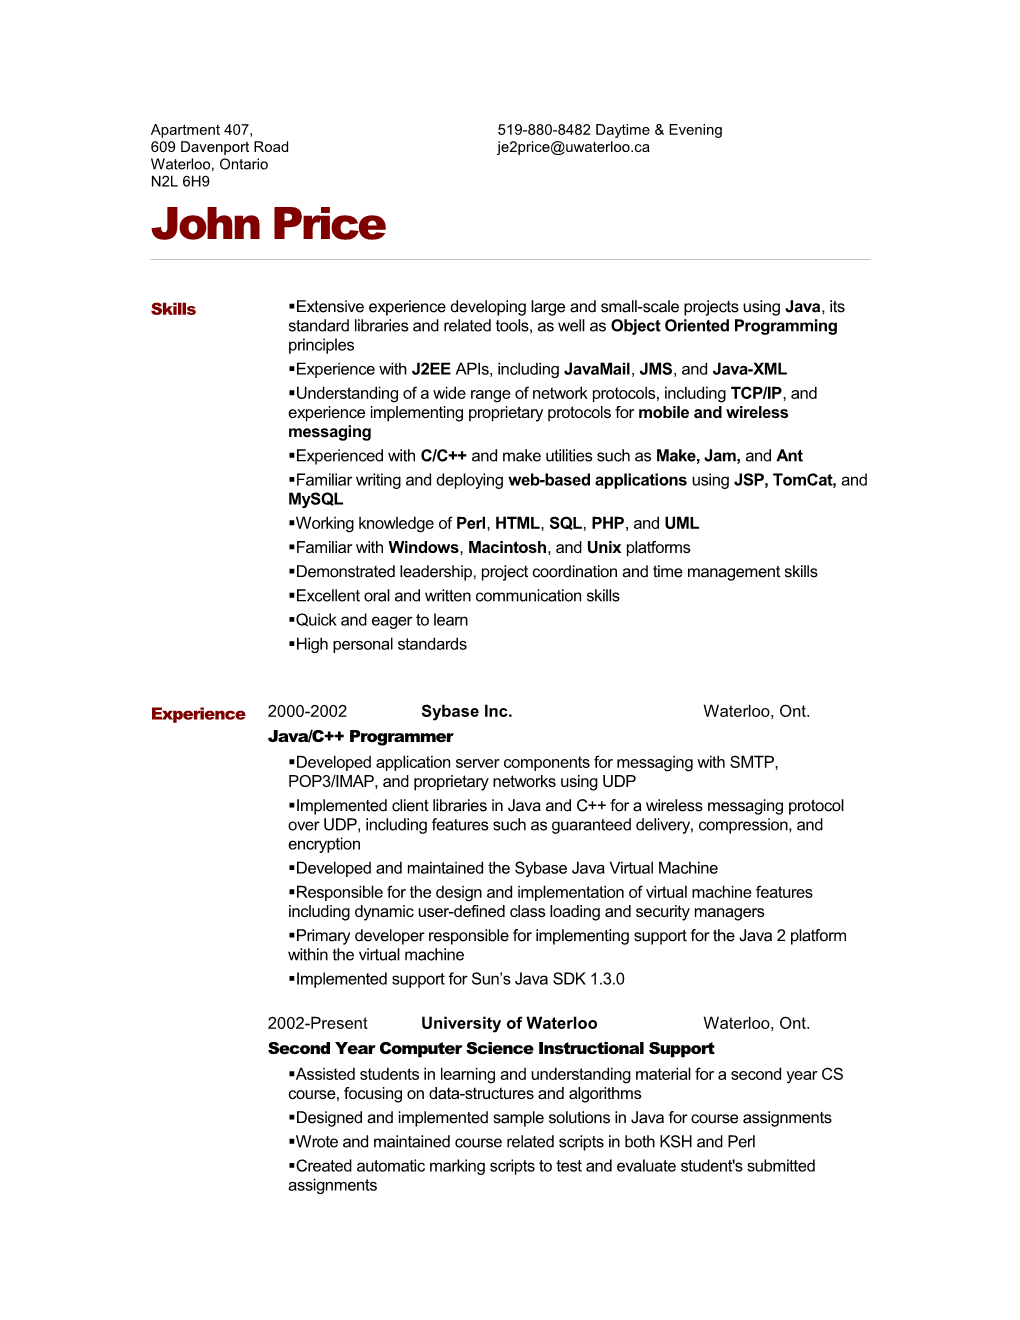 Resume for John Price